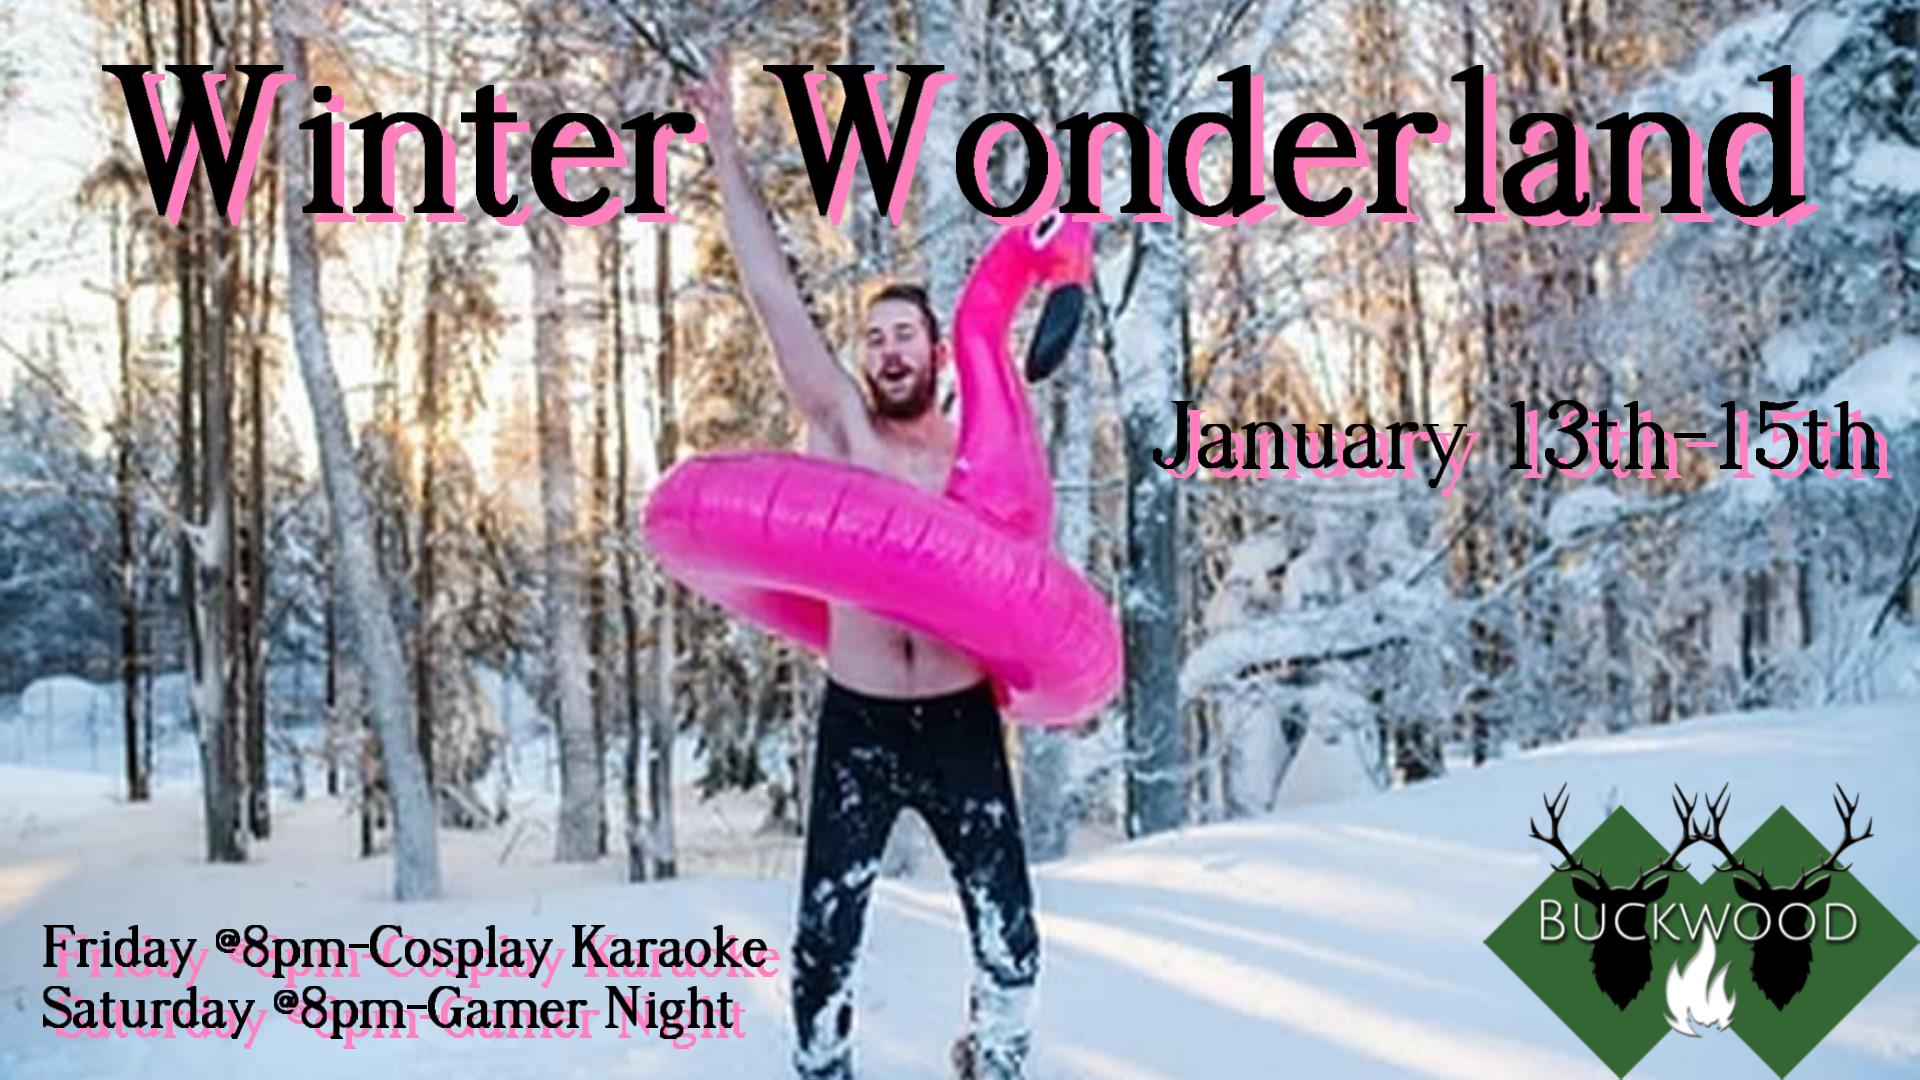 Camp Buckwood Winter Wonderland Event Poster